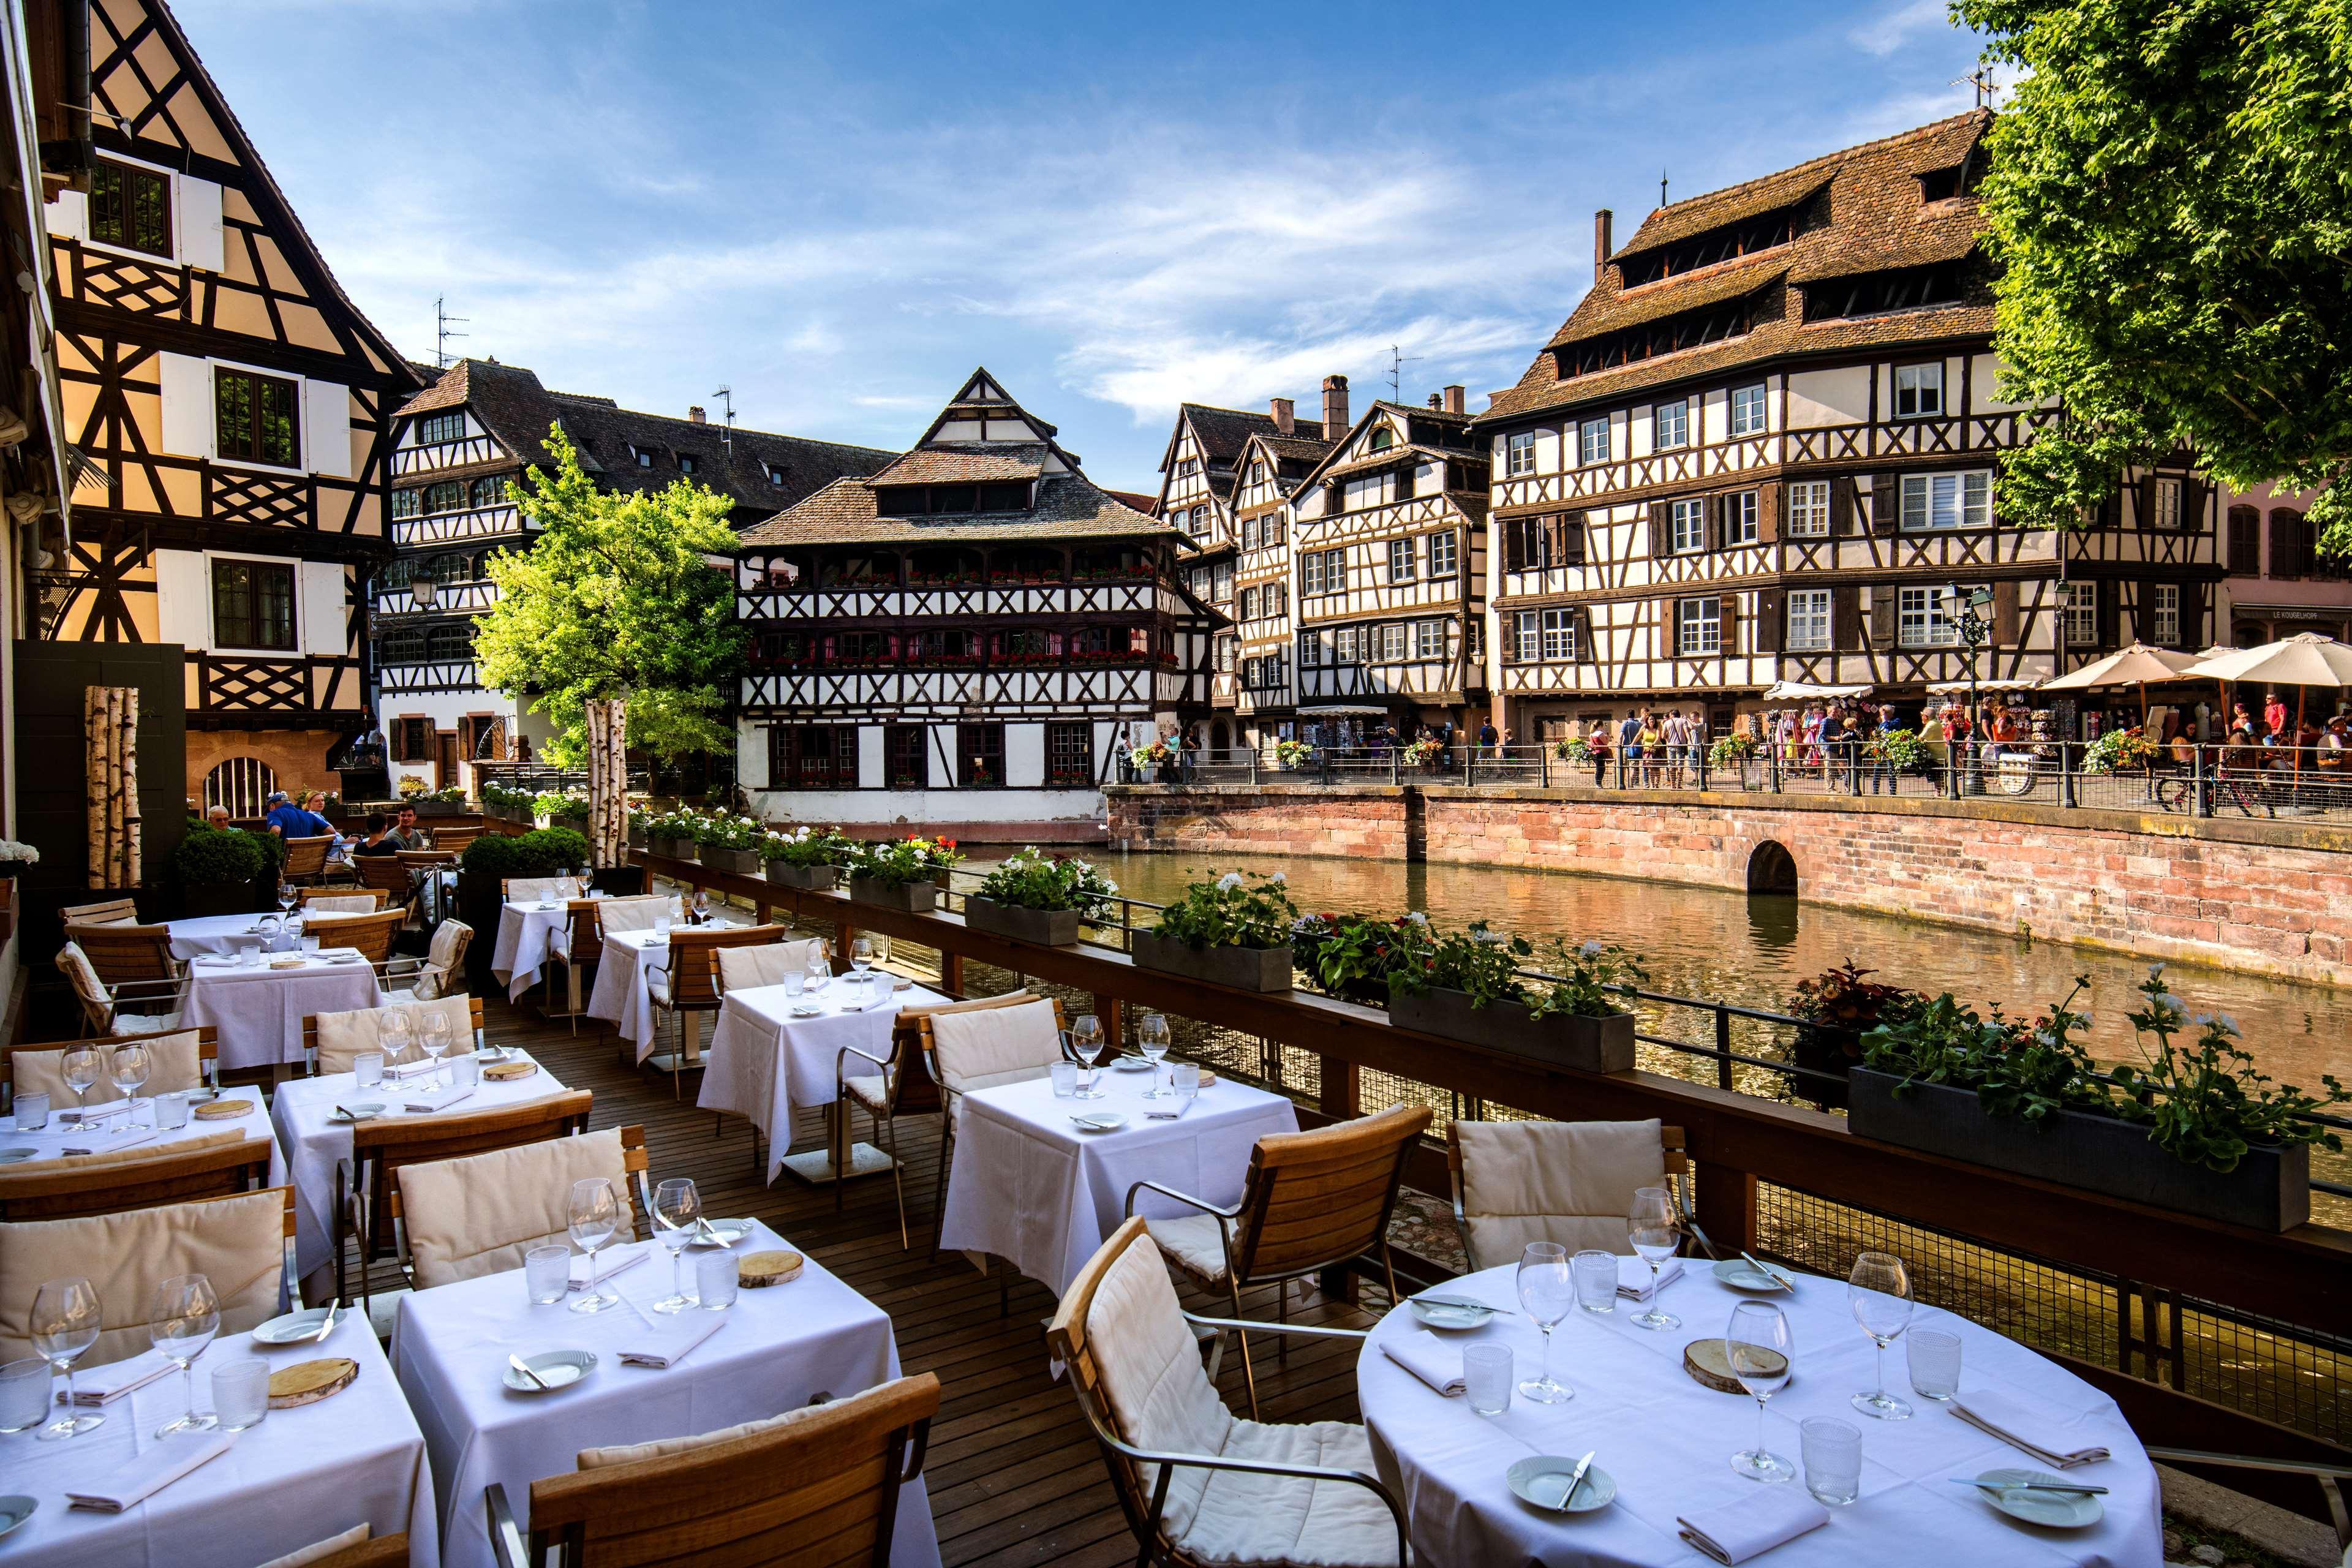 Hotel & Spa Regent Petite France Strasburgo Esterno foto